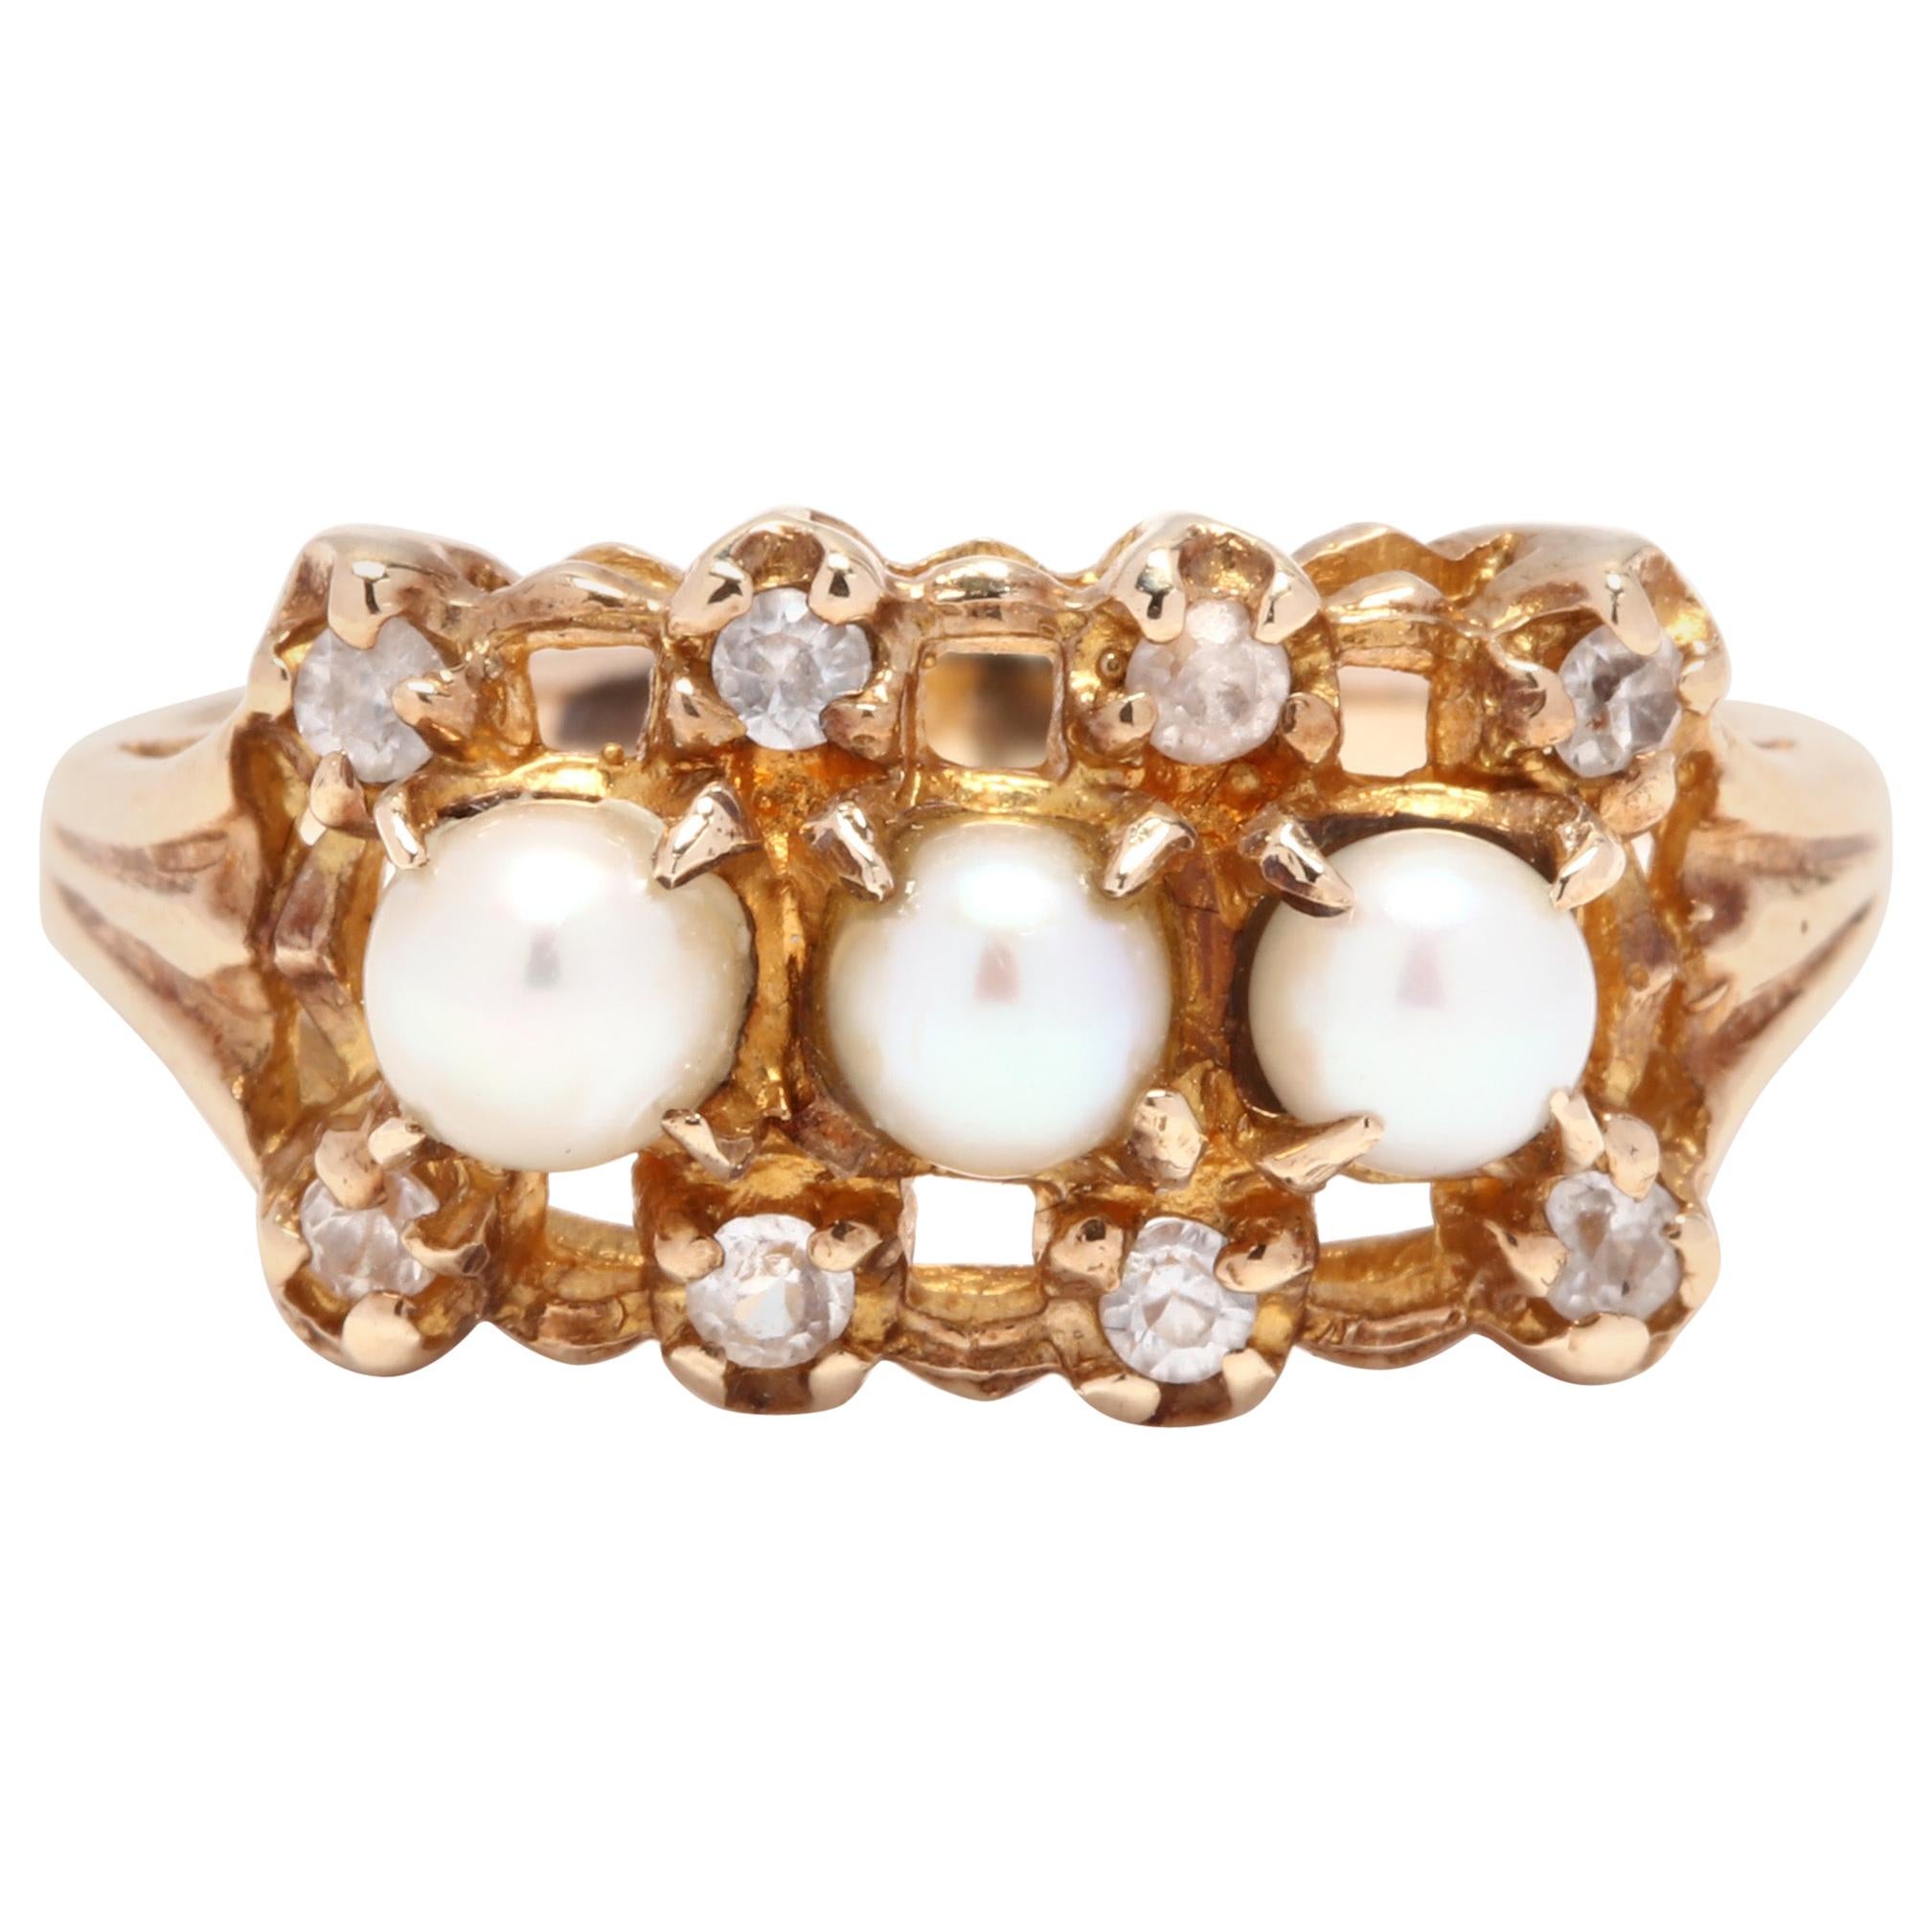 10 Karat Yellow Gold, Pearl and Diamond Ring, June Birthstone